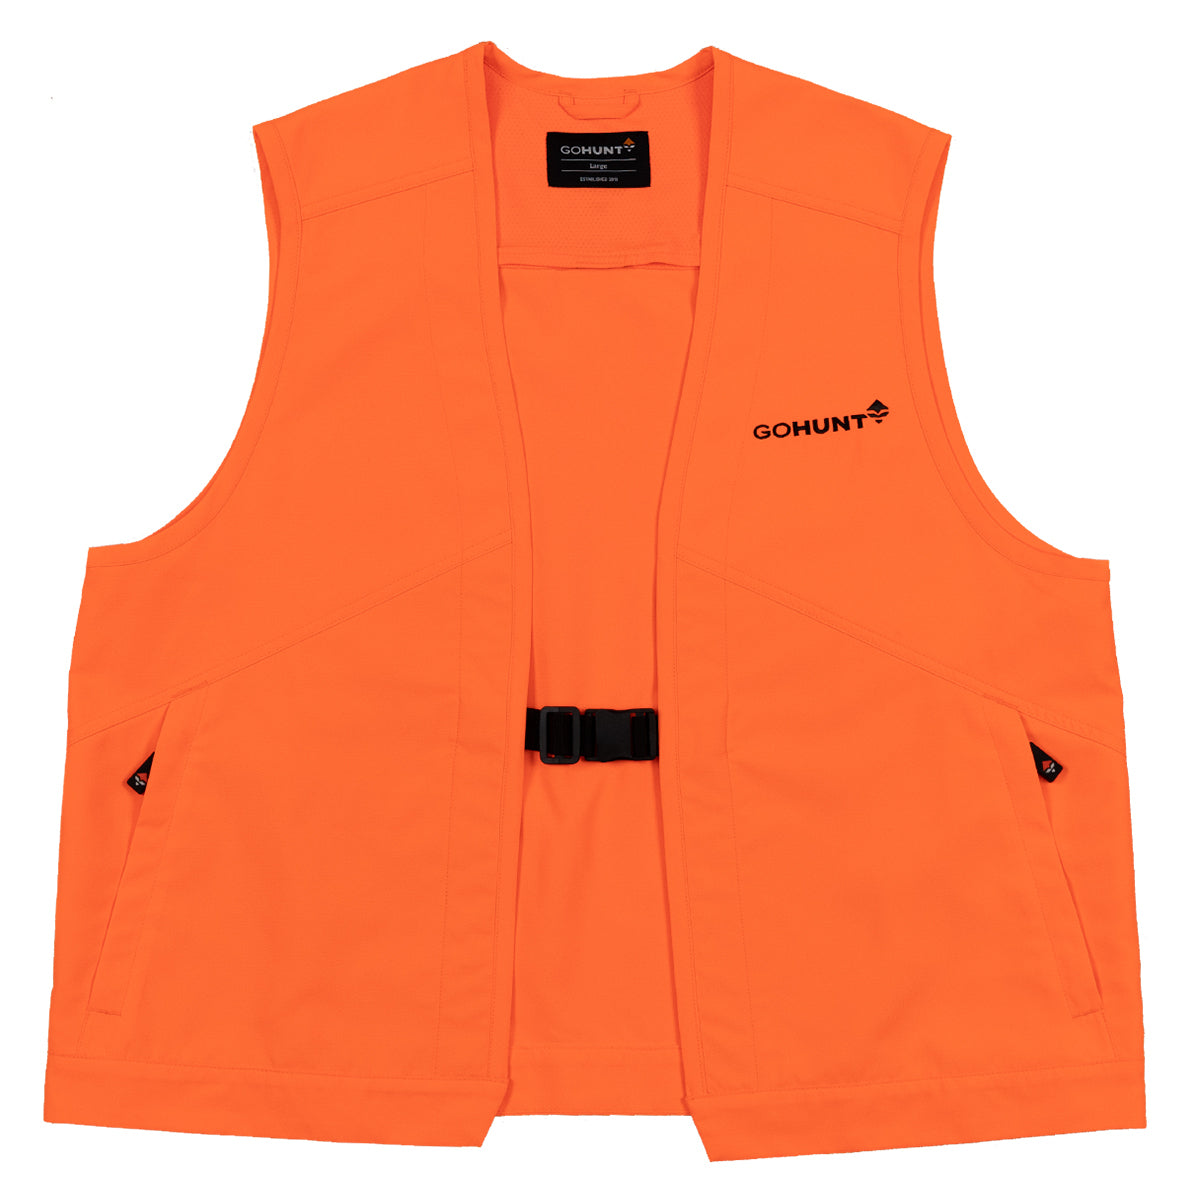 GOHUNT Pumpkin Patch Vest in  by GOHUNT | GOHUNT - GOHUNT Shop